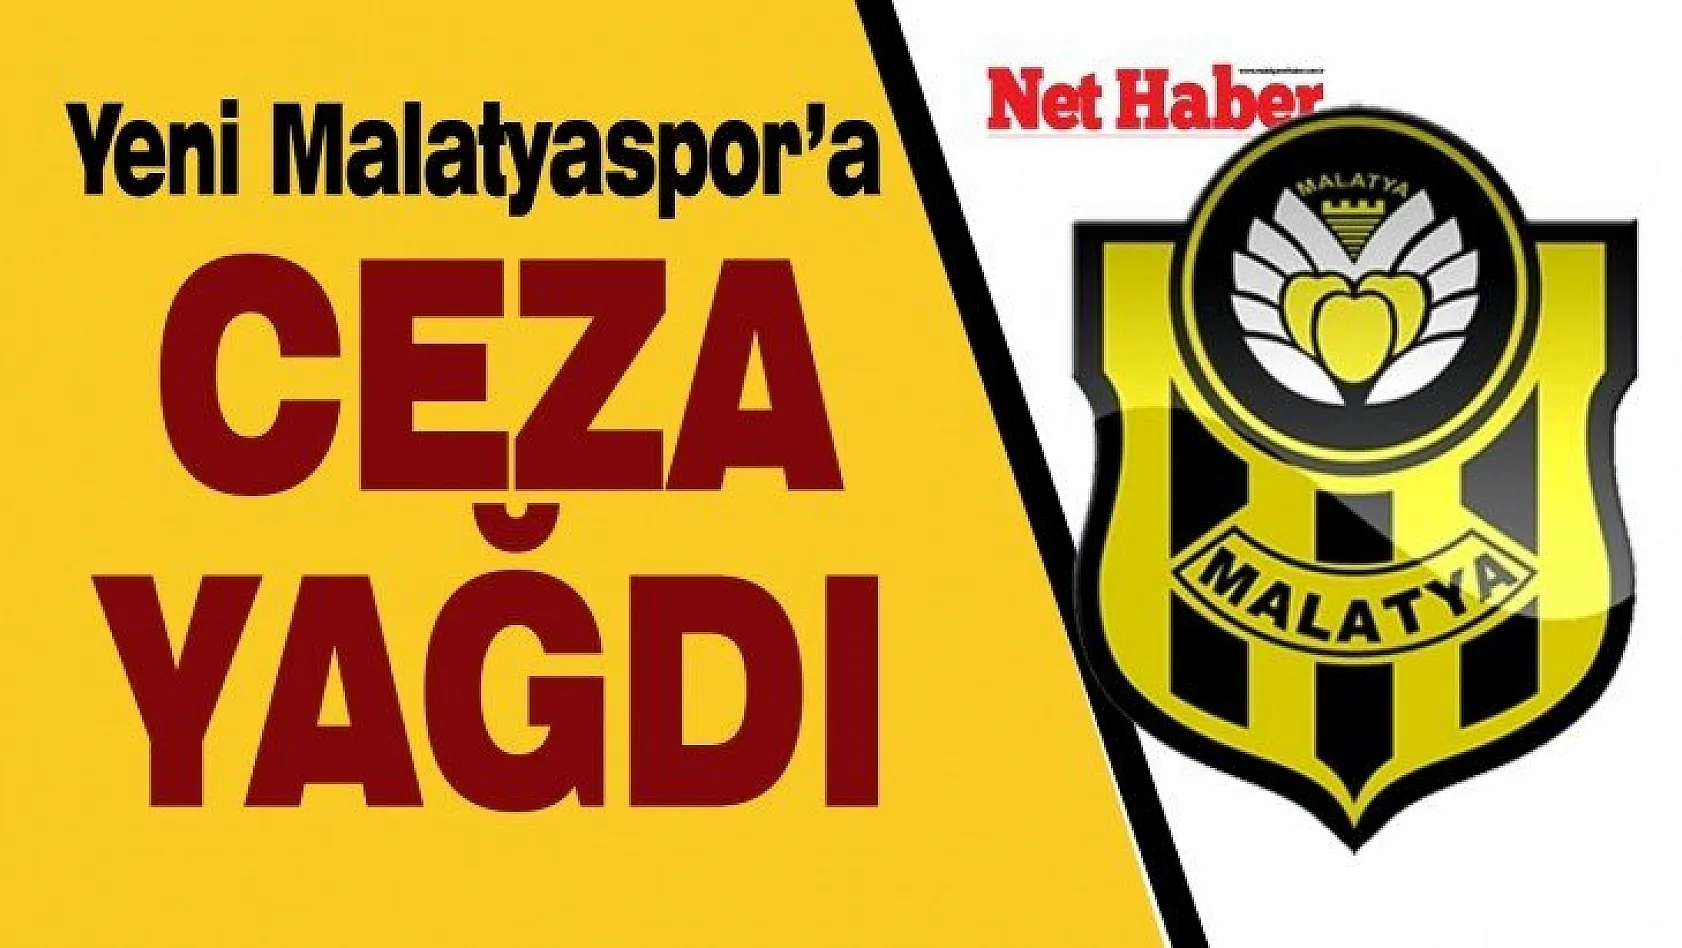 Yeni Malatyaspor'a ceza yağdı